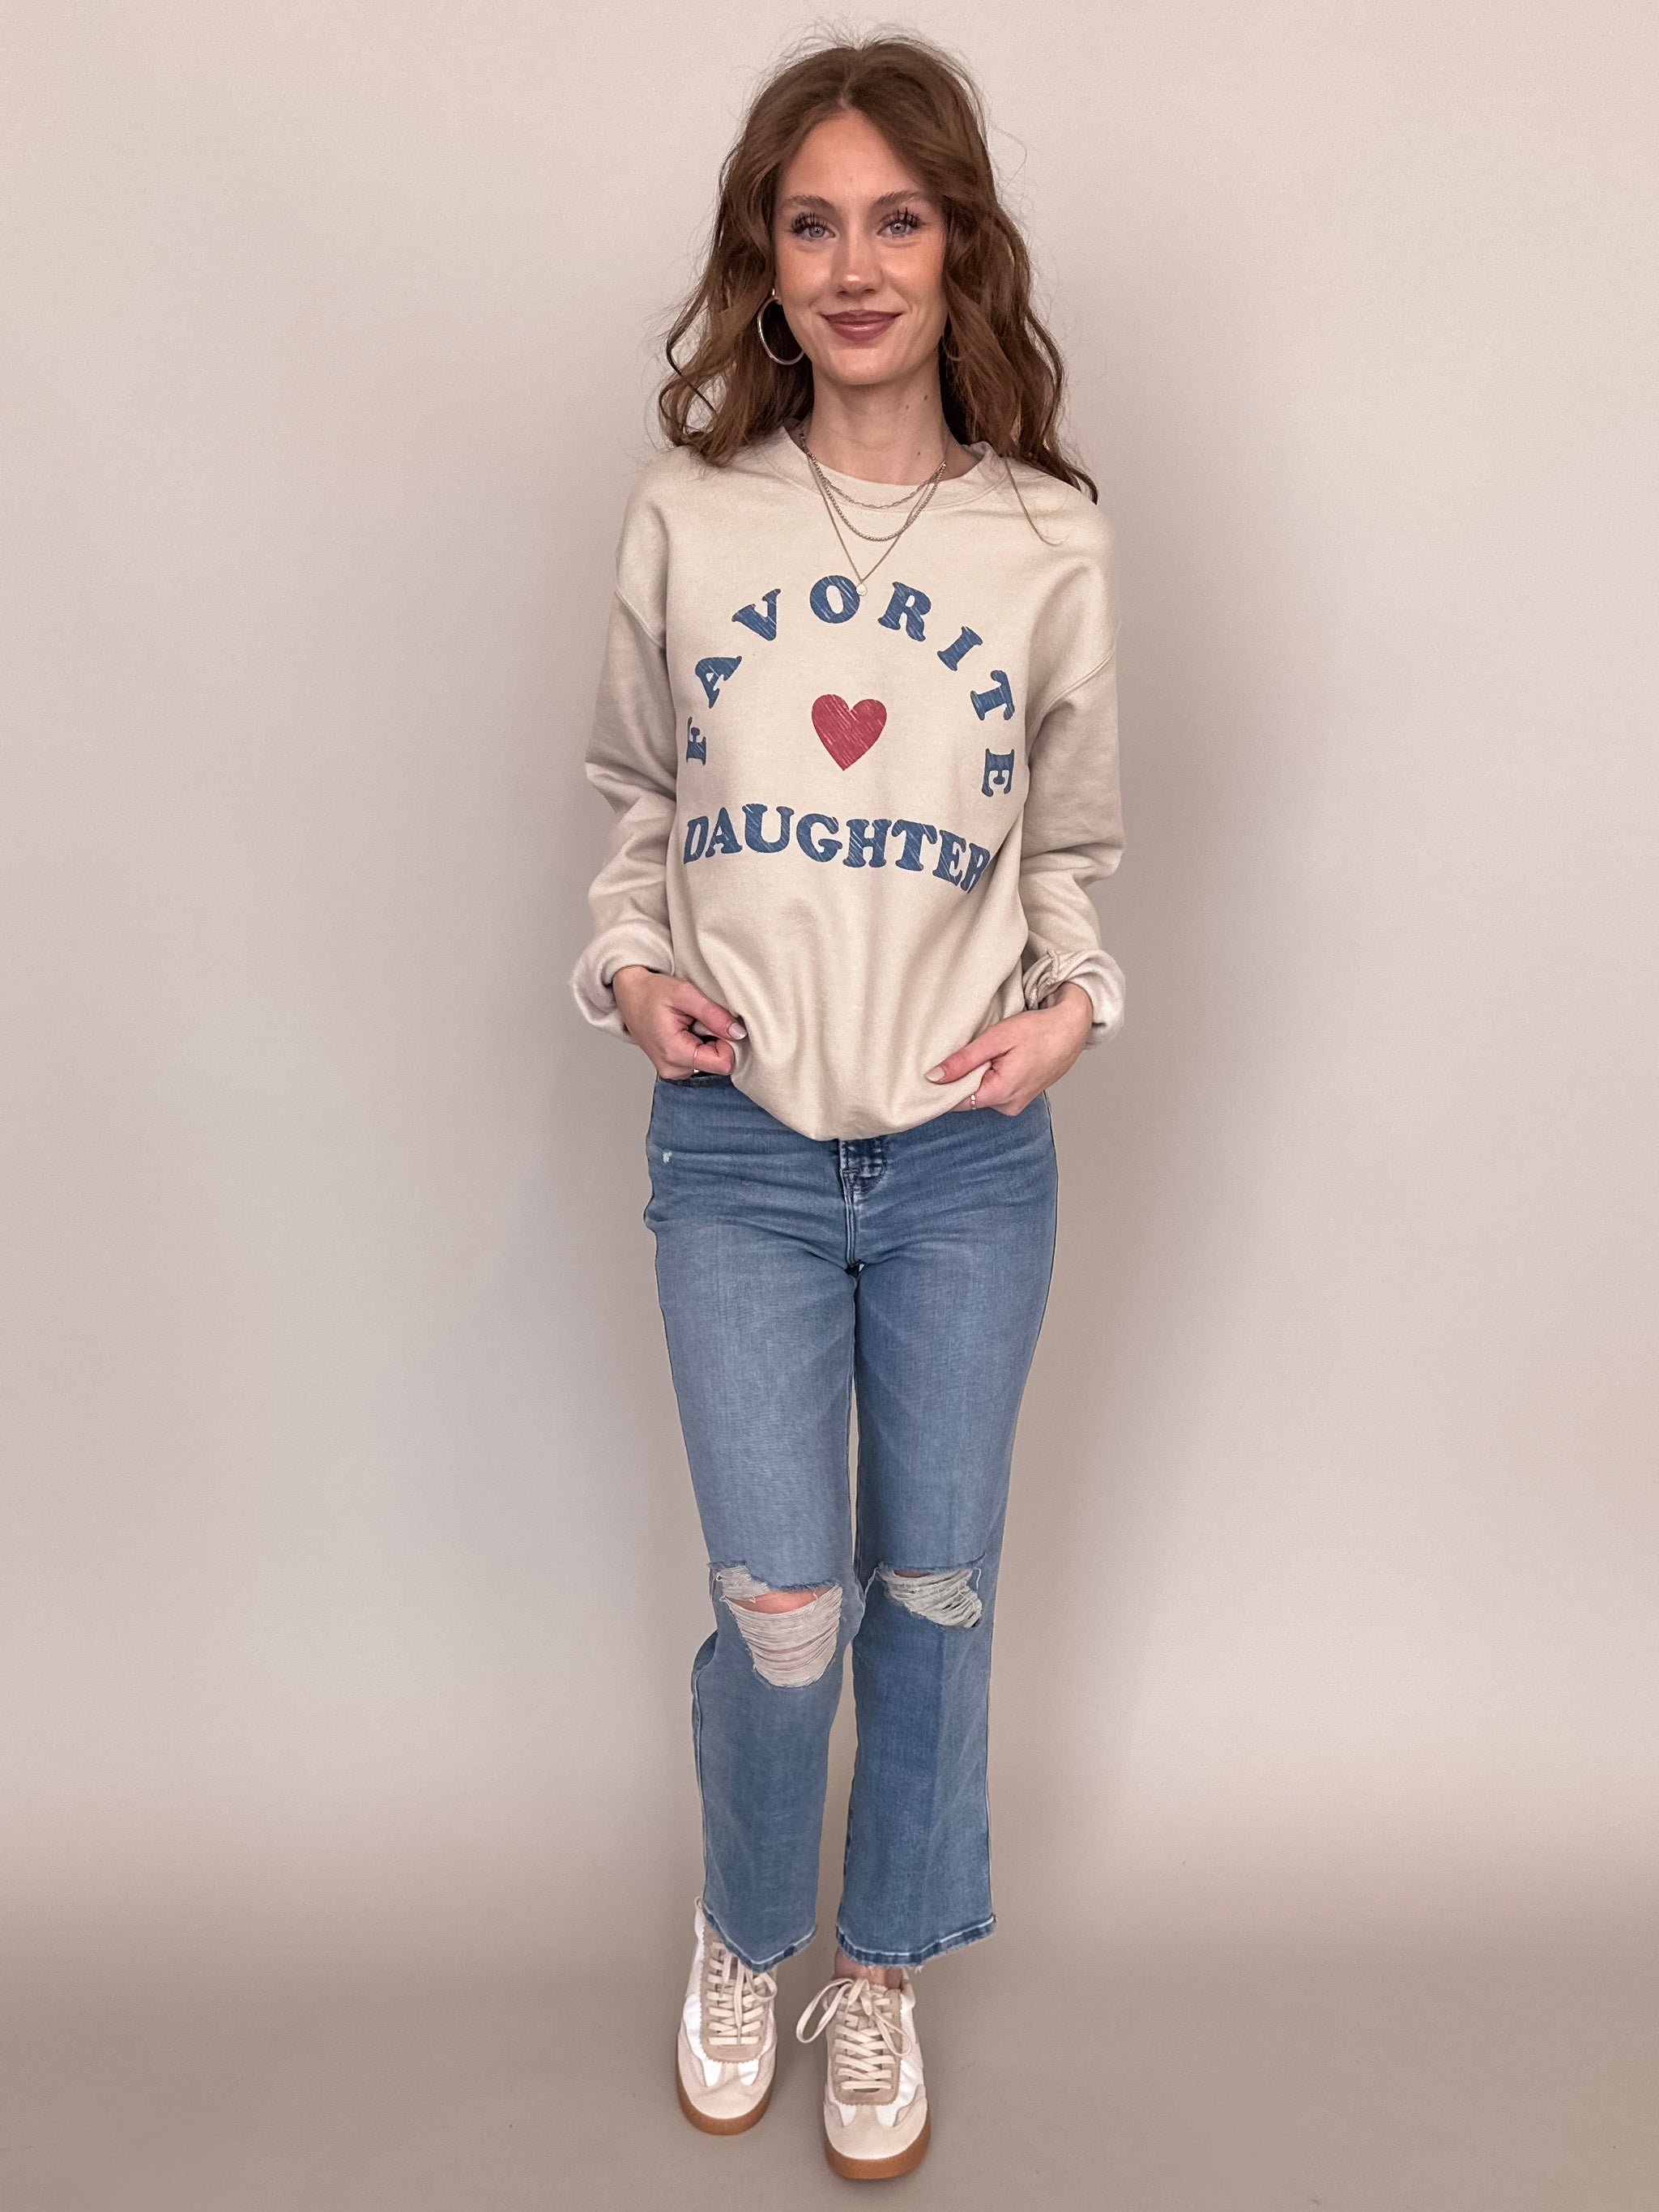 Favorite Daughter Graphic Sweatshirt Look image